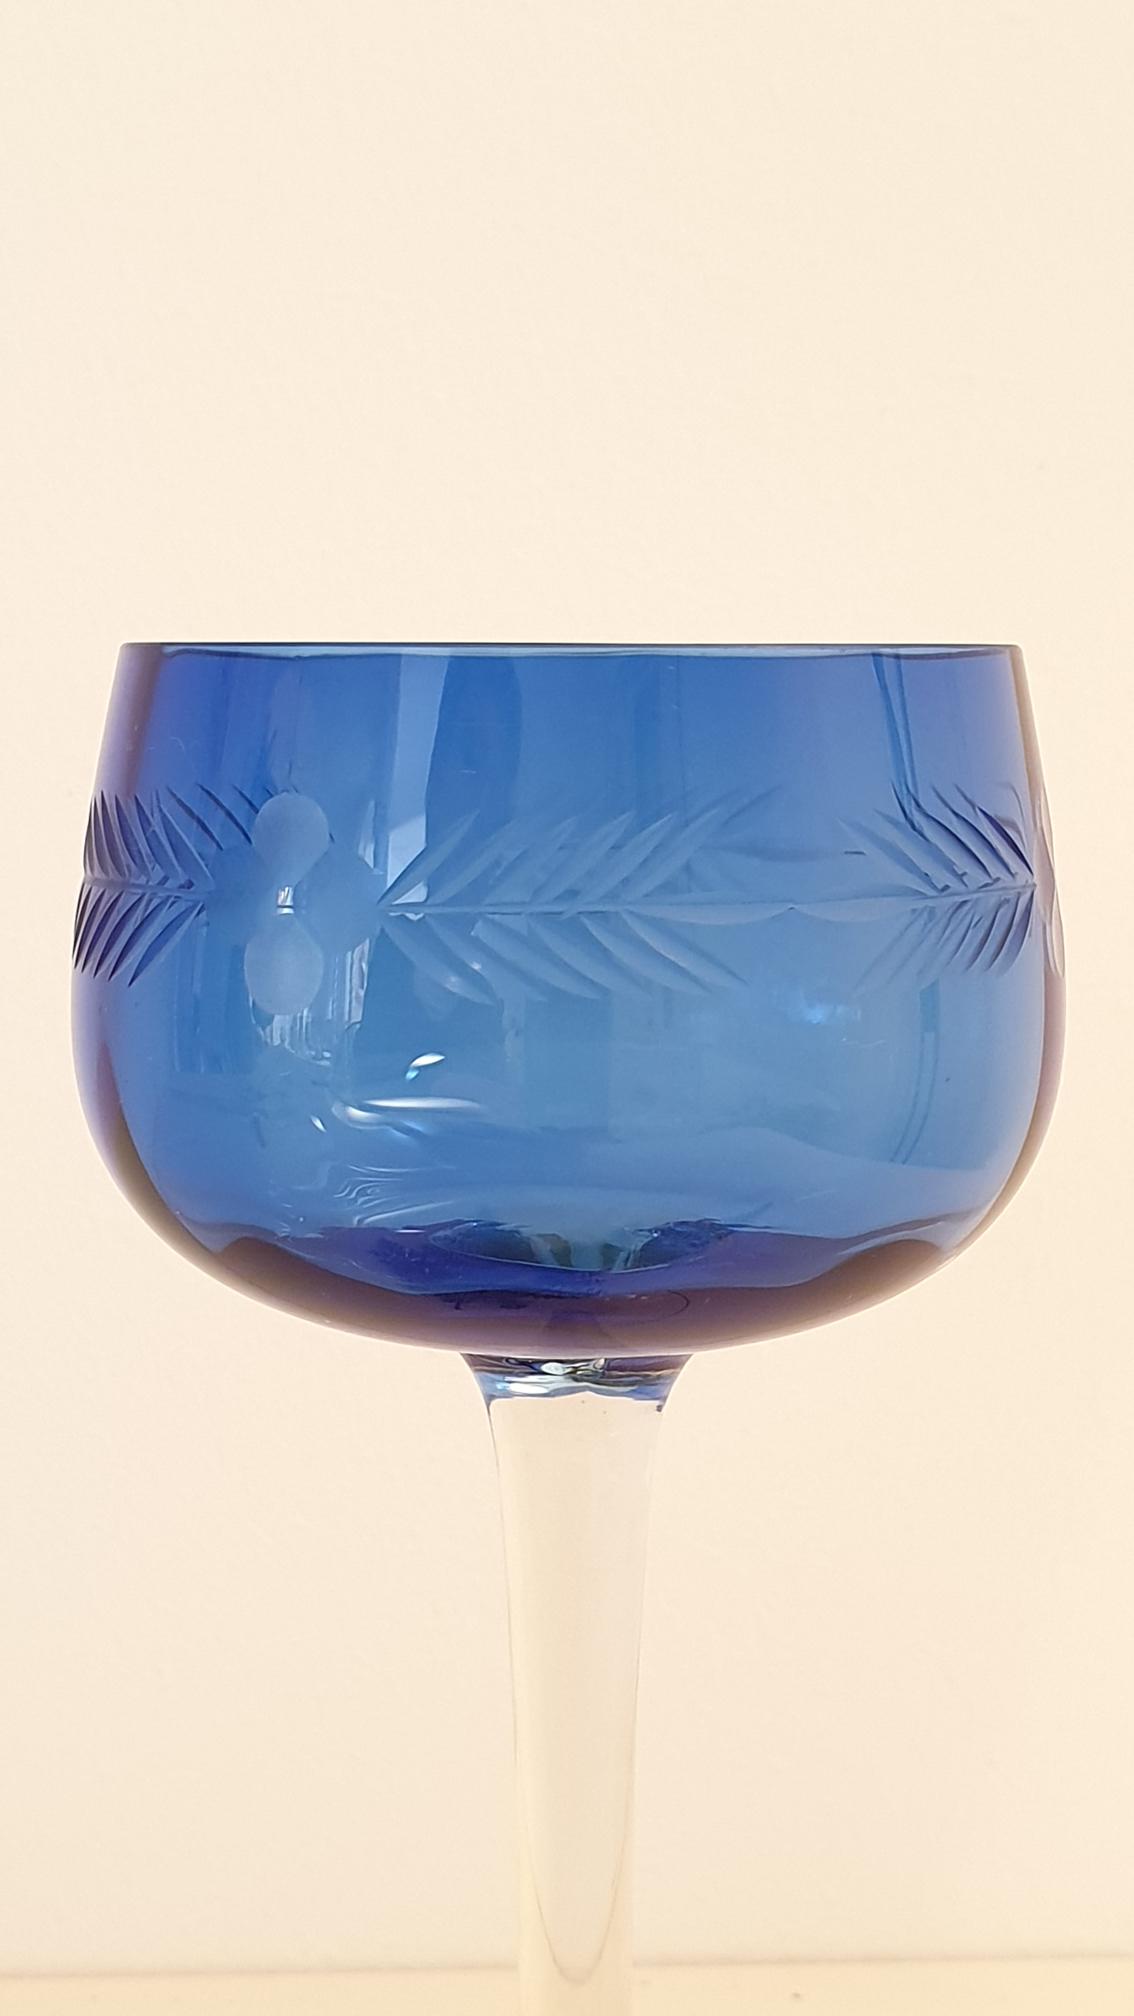  Antike Kristall Gläser im Set - blau